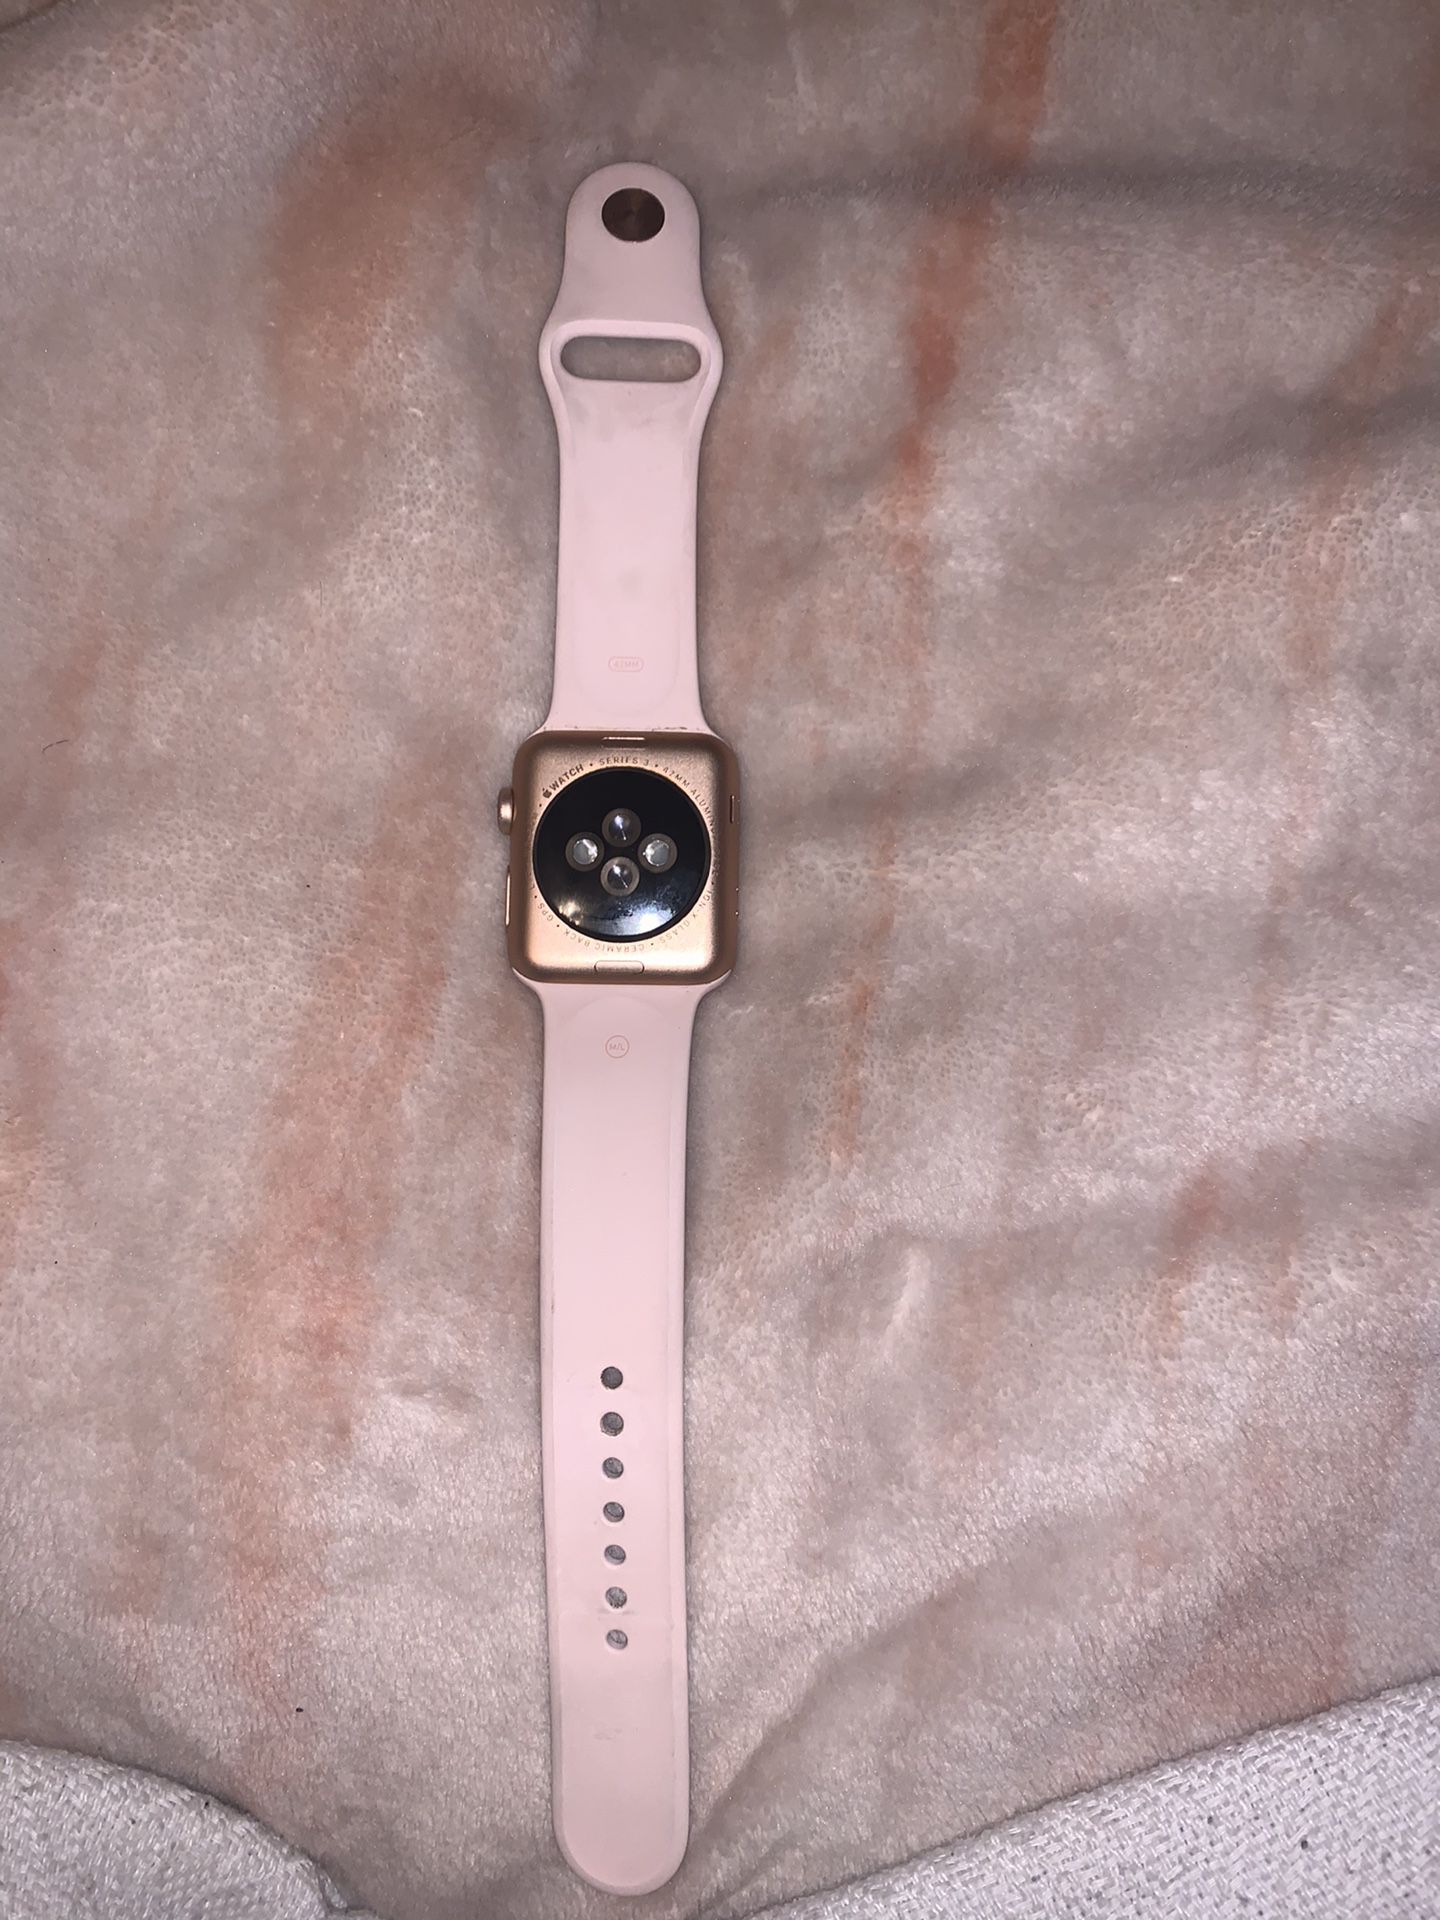 Apple Watch series 3